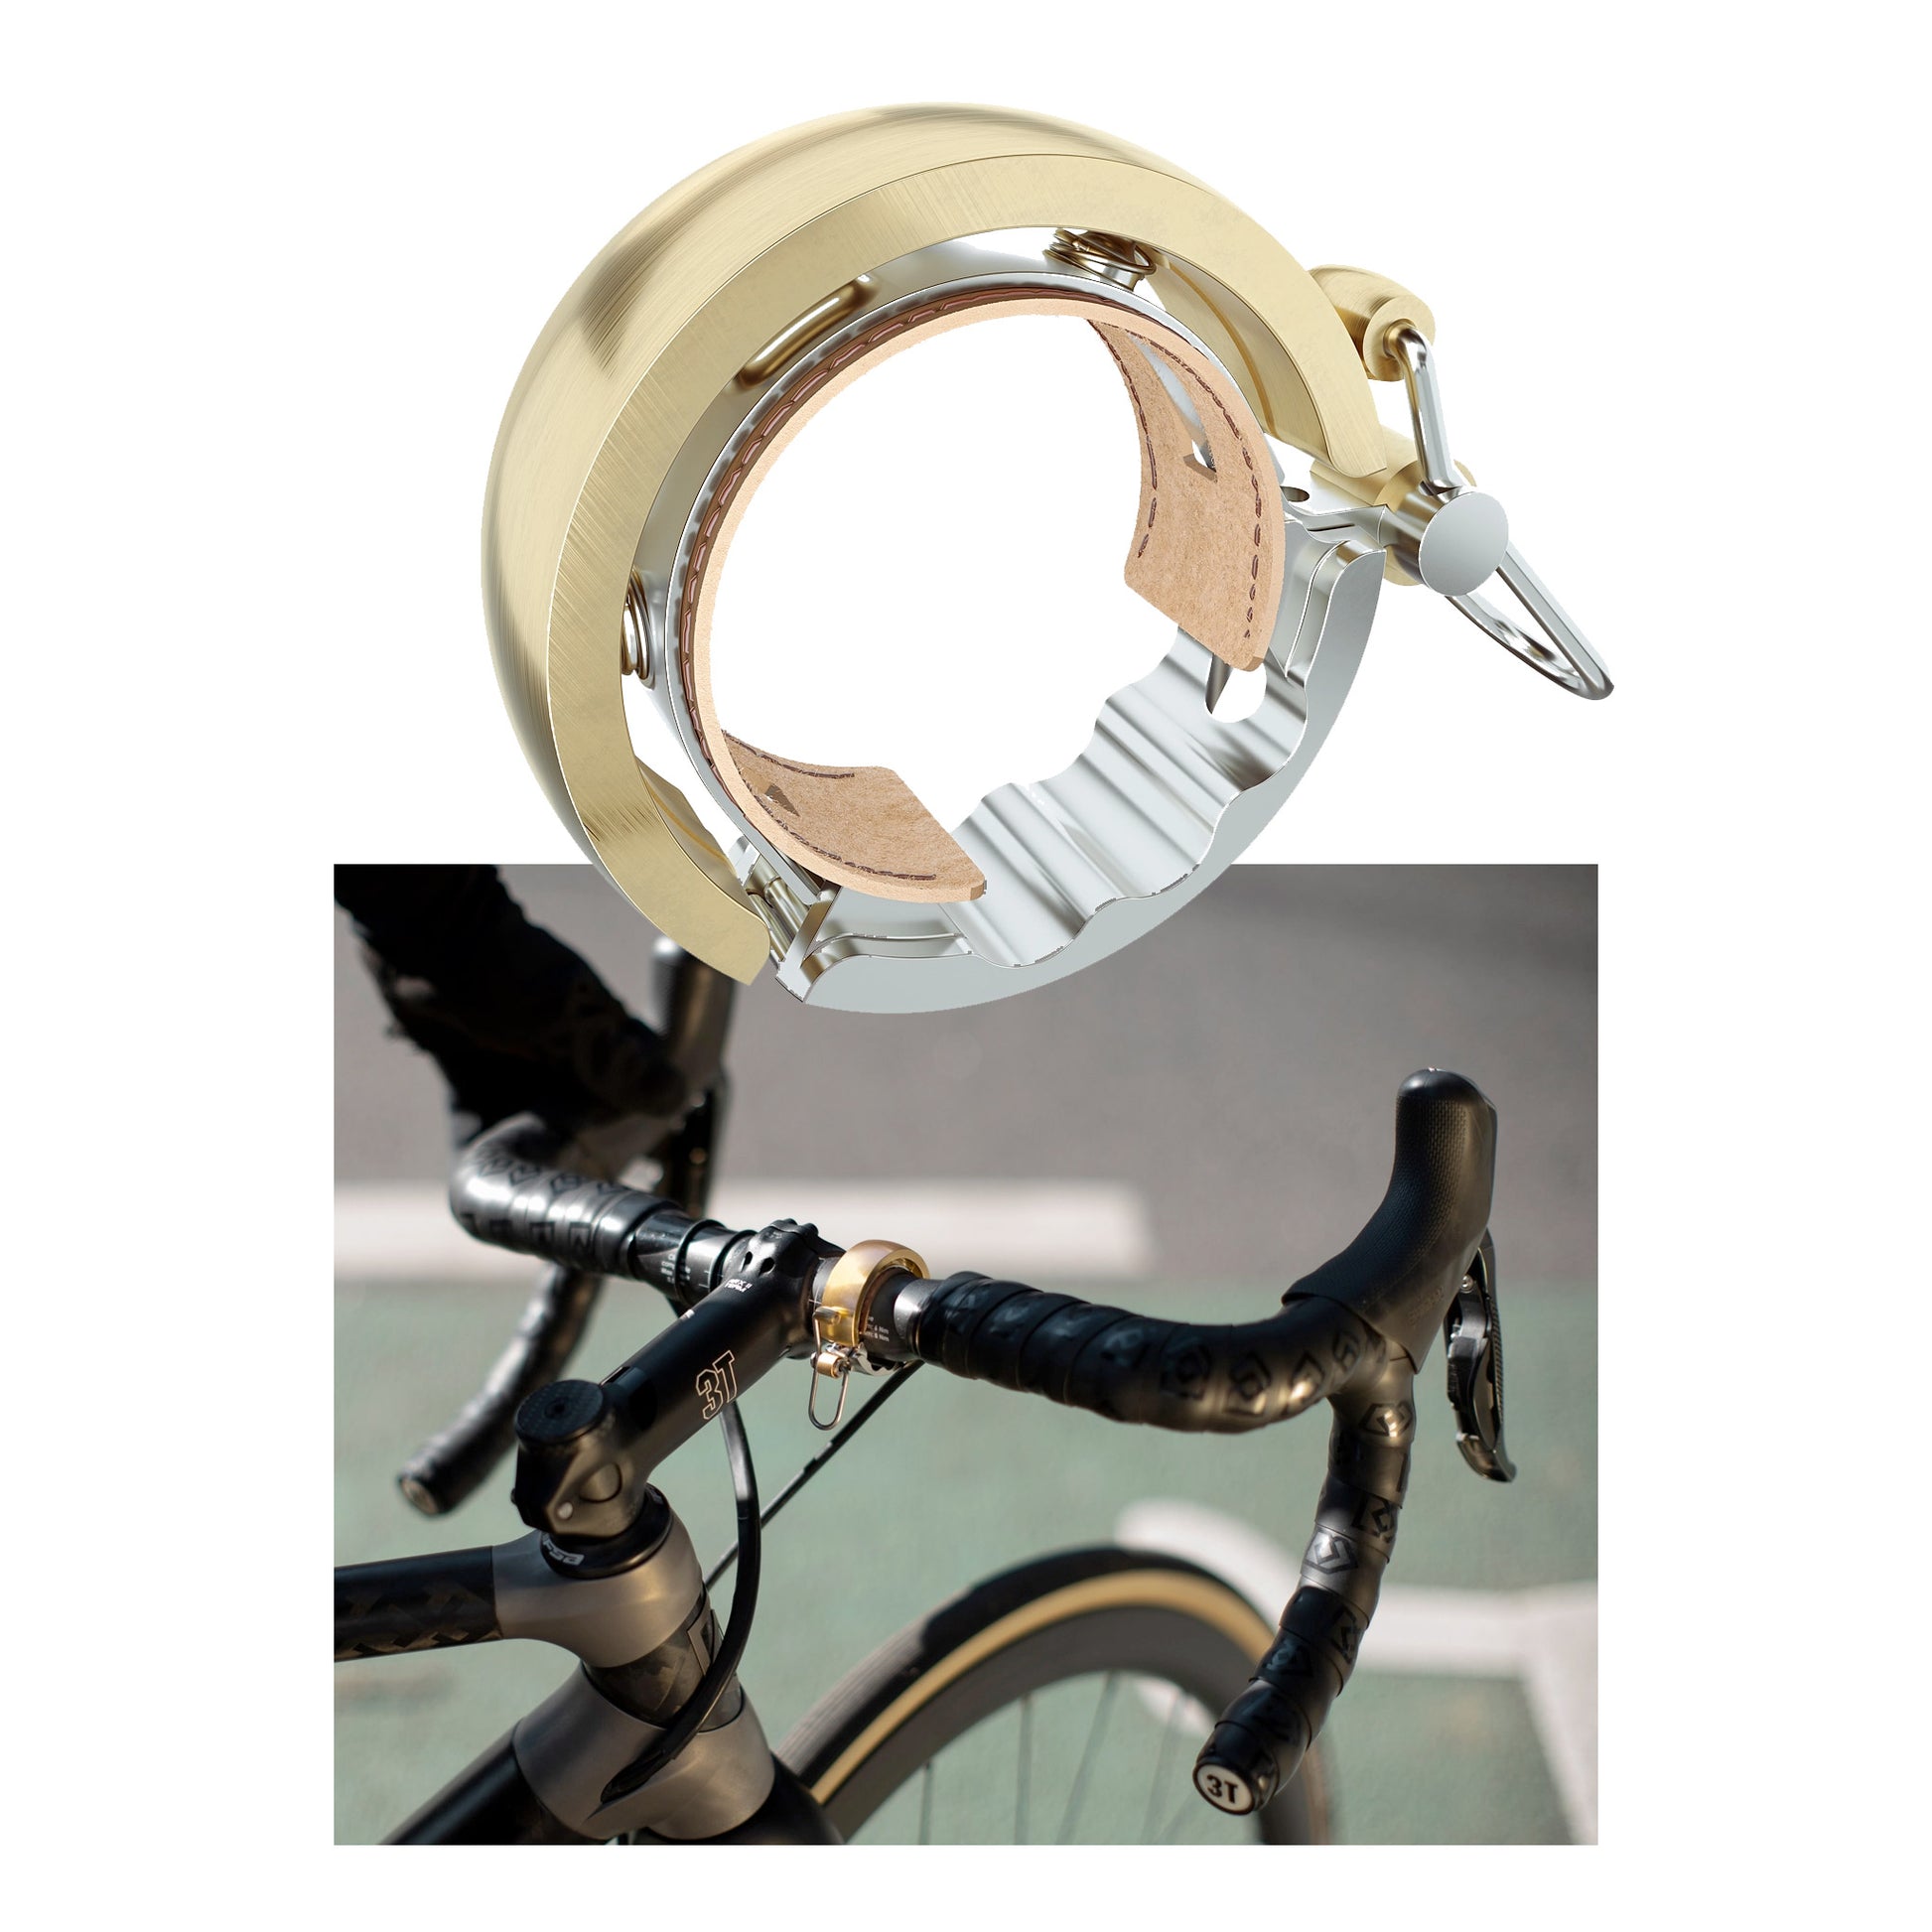 Knog OI Luxe Large, Brass - Fits 31.8mm bars buy online at Woolys Wheels bike shop Sydney